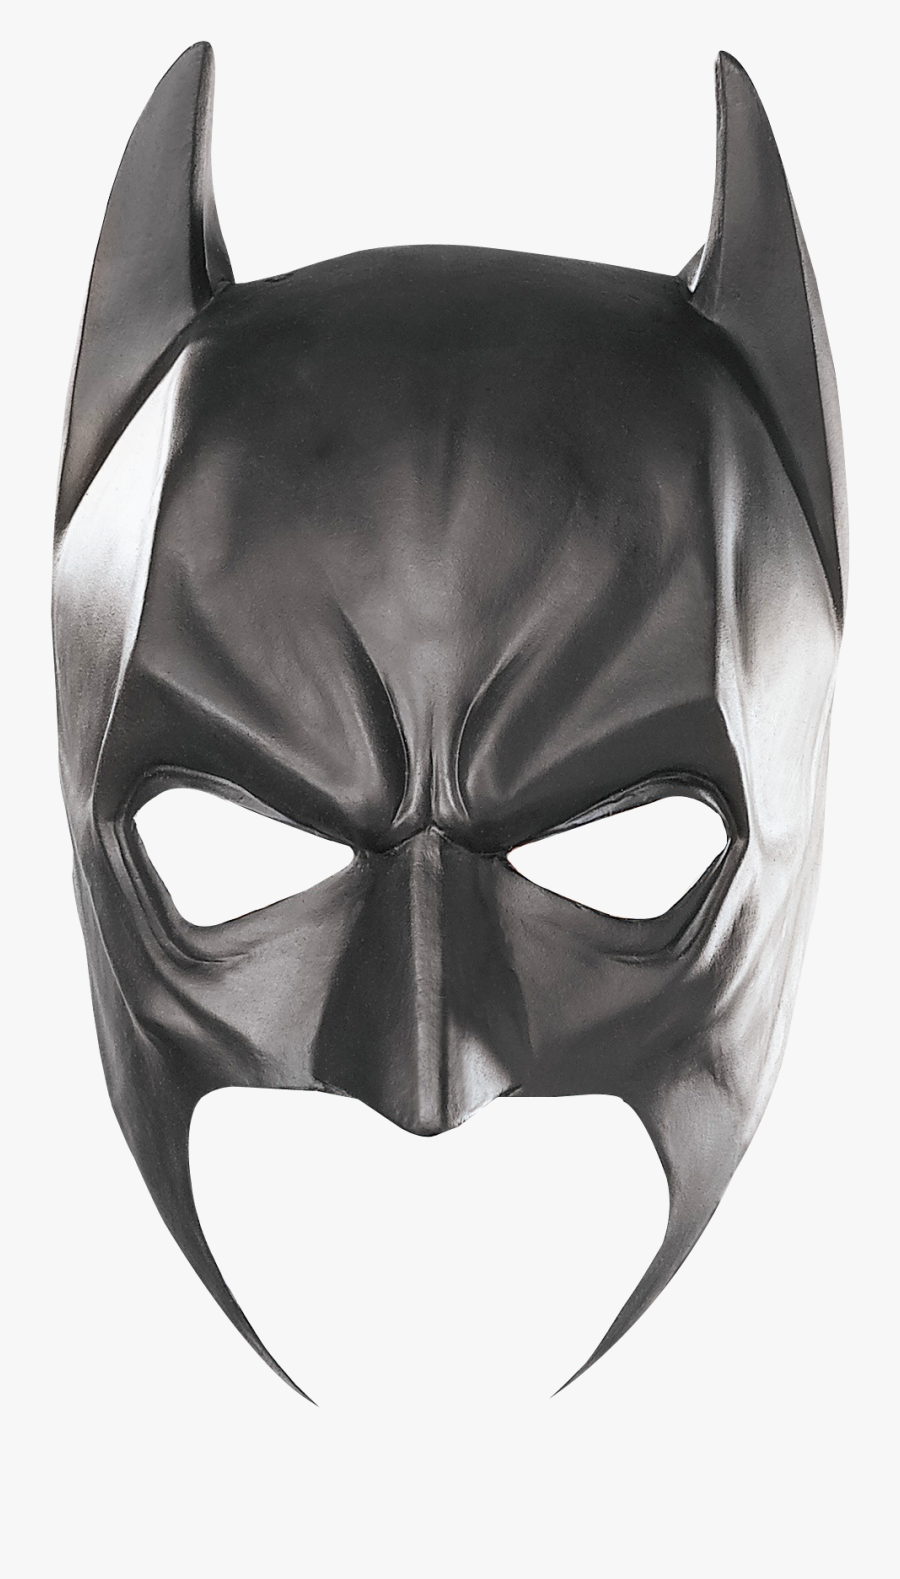 Batman Mask Png Image - Batman Mask Png, Transparent Clipart